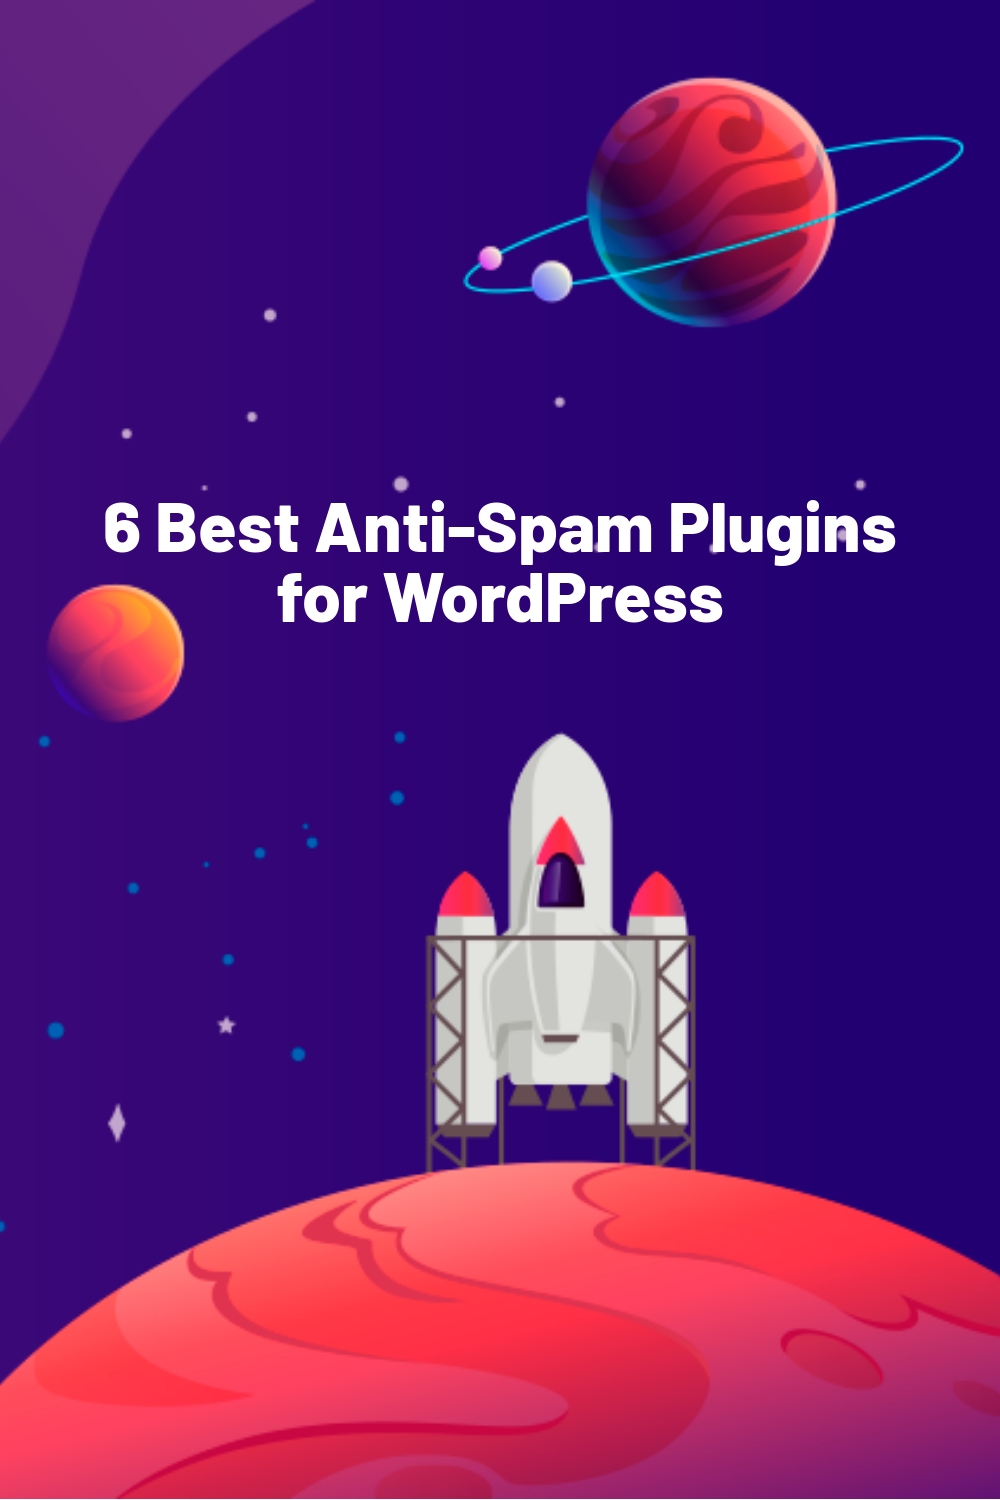 6 Best Anti-Spam Plugins for WordPress